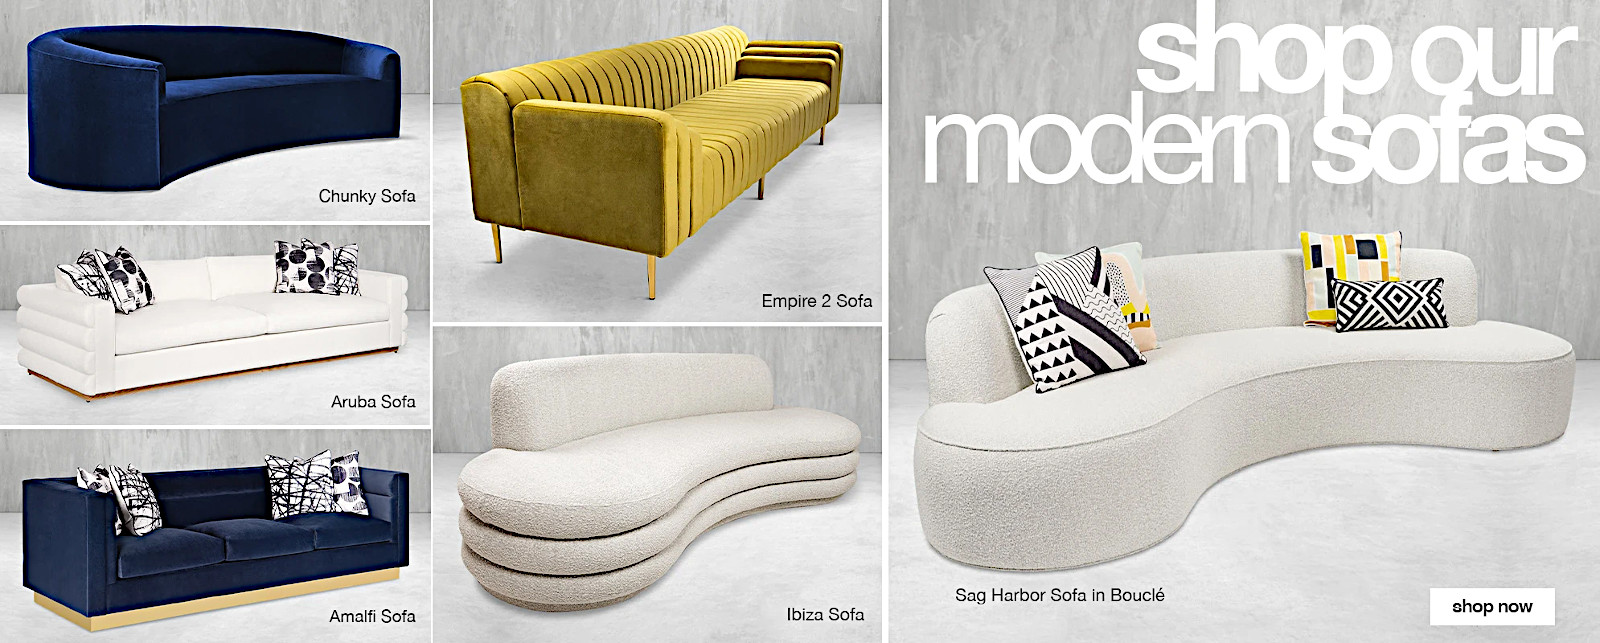 Good Deal modern sofas